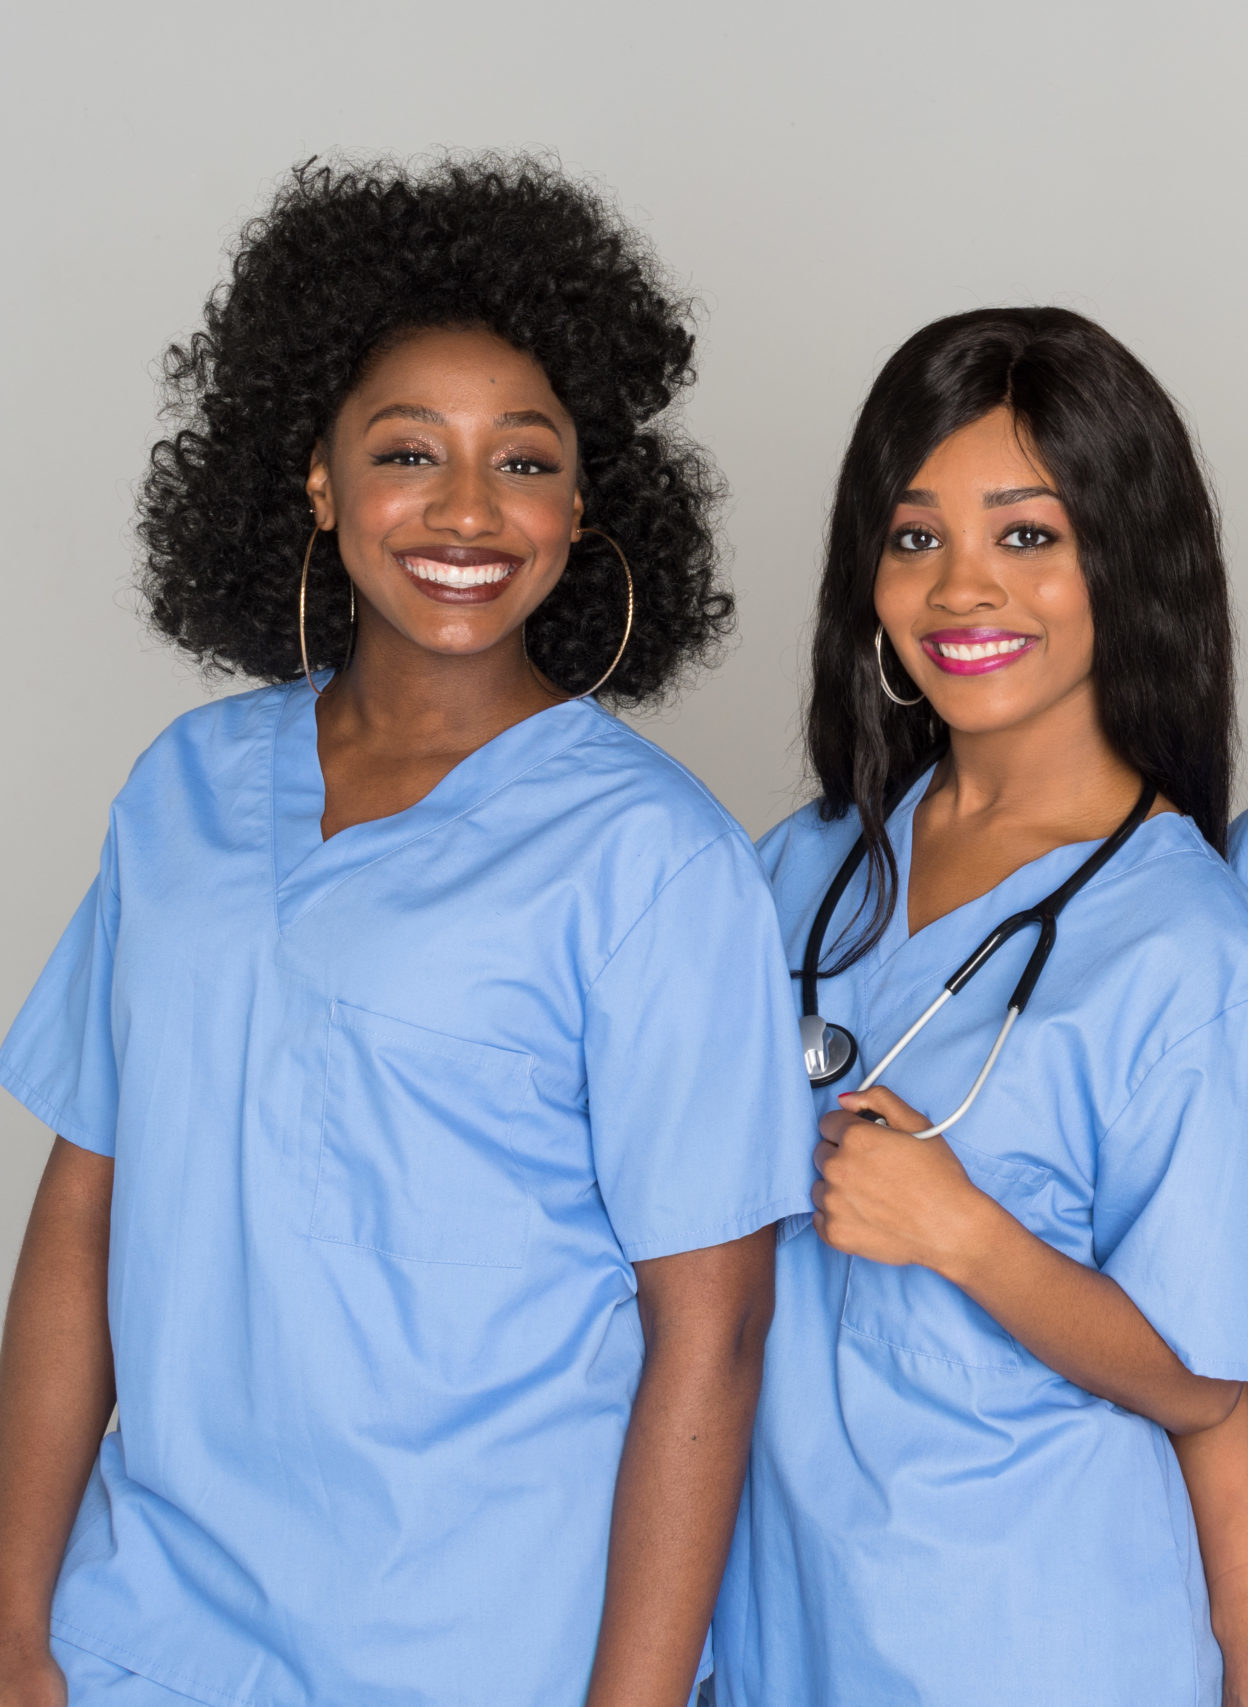 Large group of female CNA nurses working together